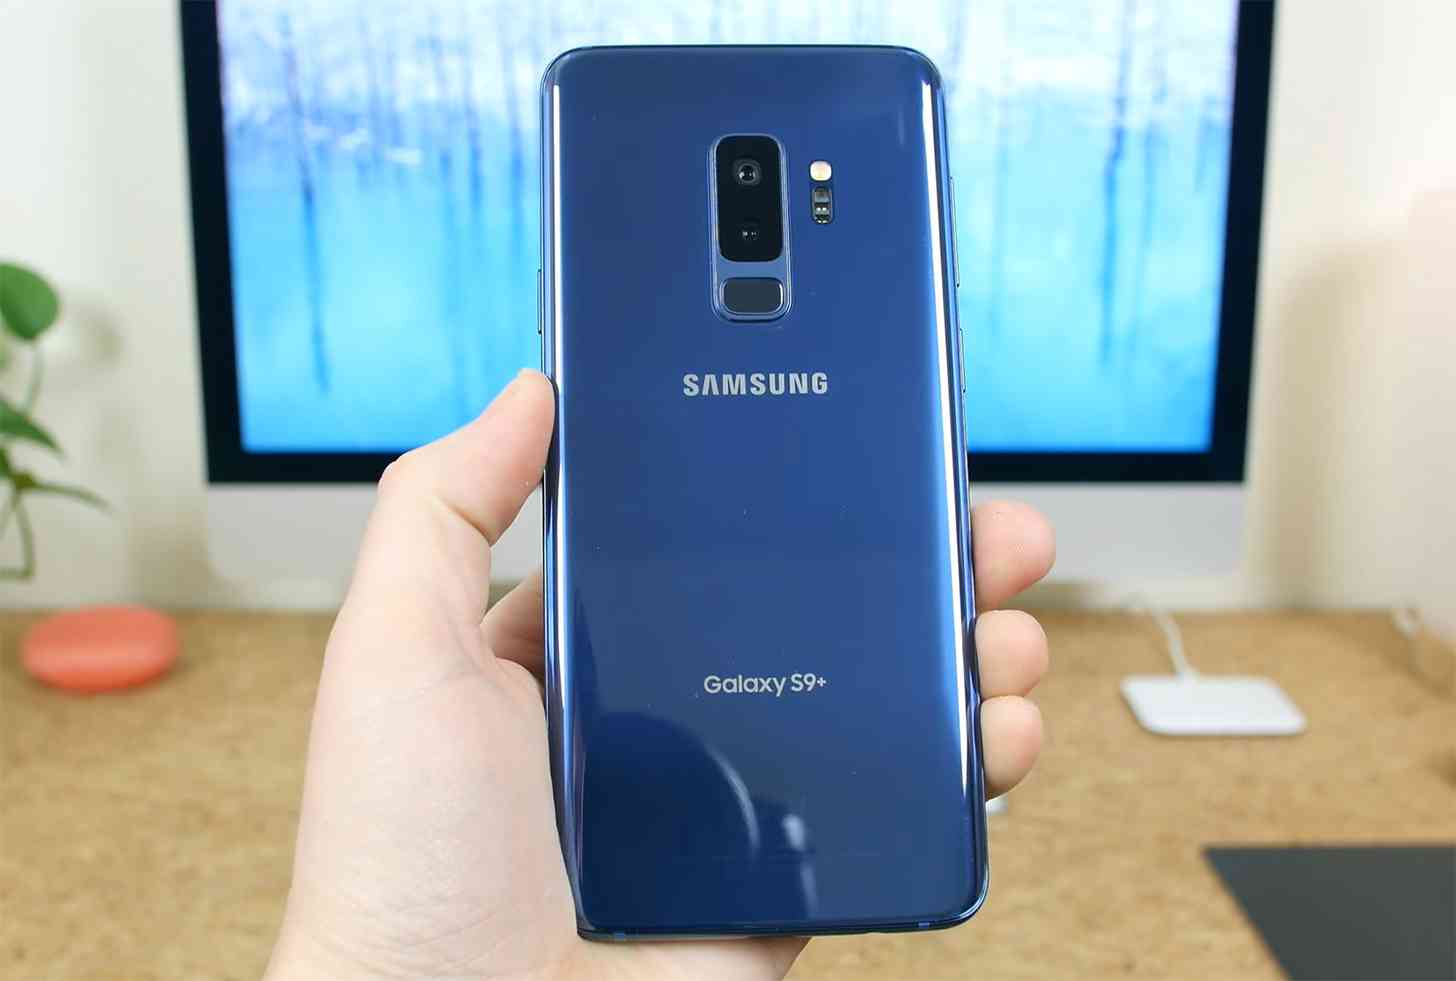 Samsung Galaxy S9+ hands on